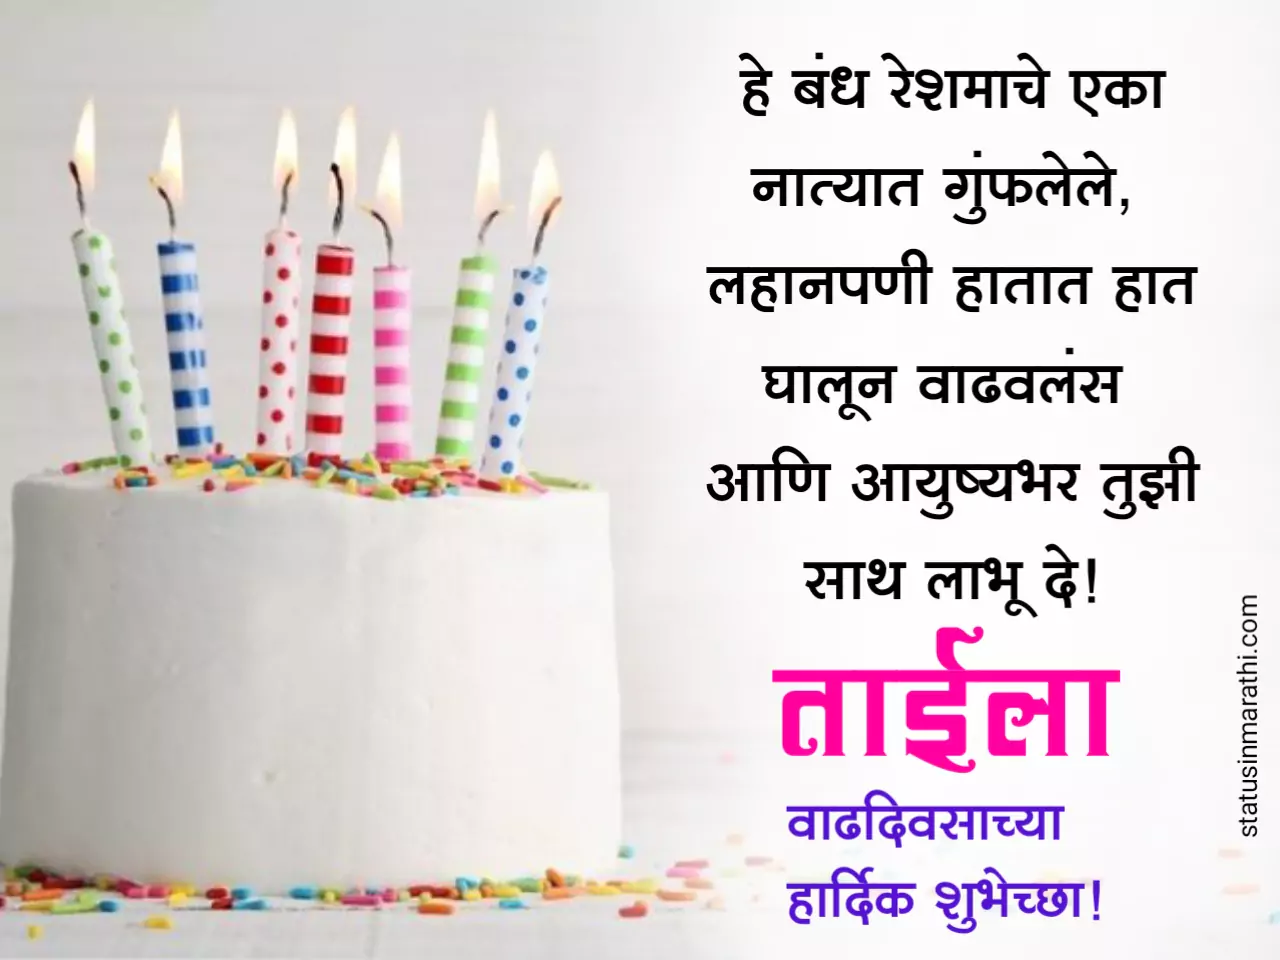 Happy Birthday Image for sister in marathi